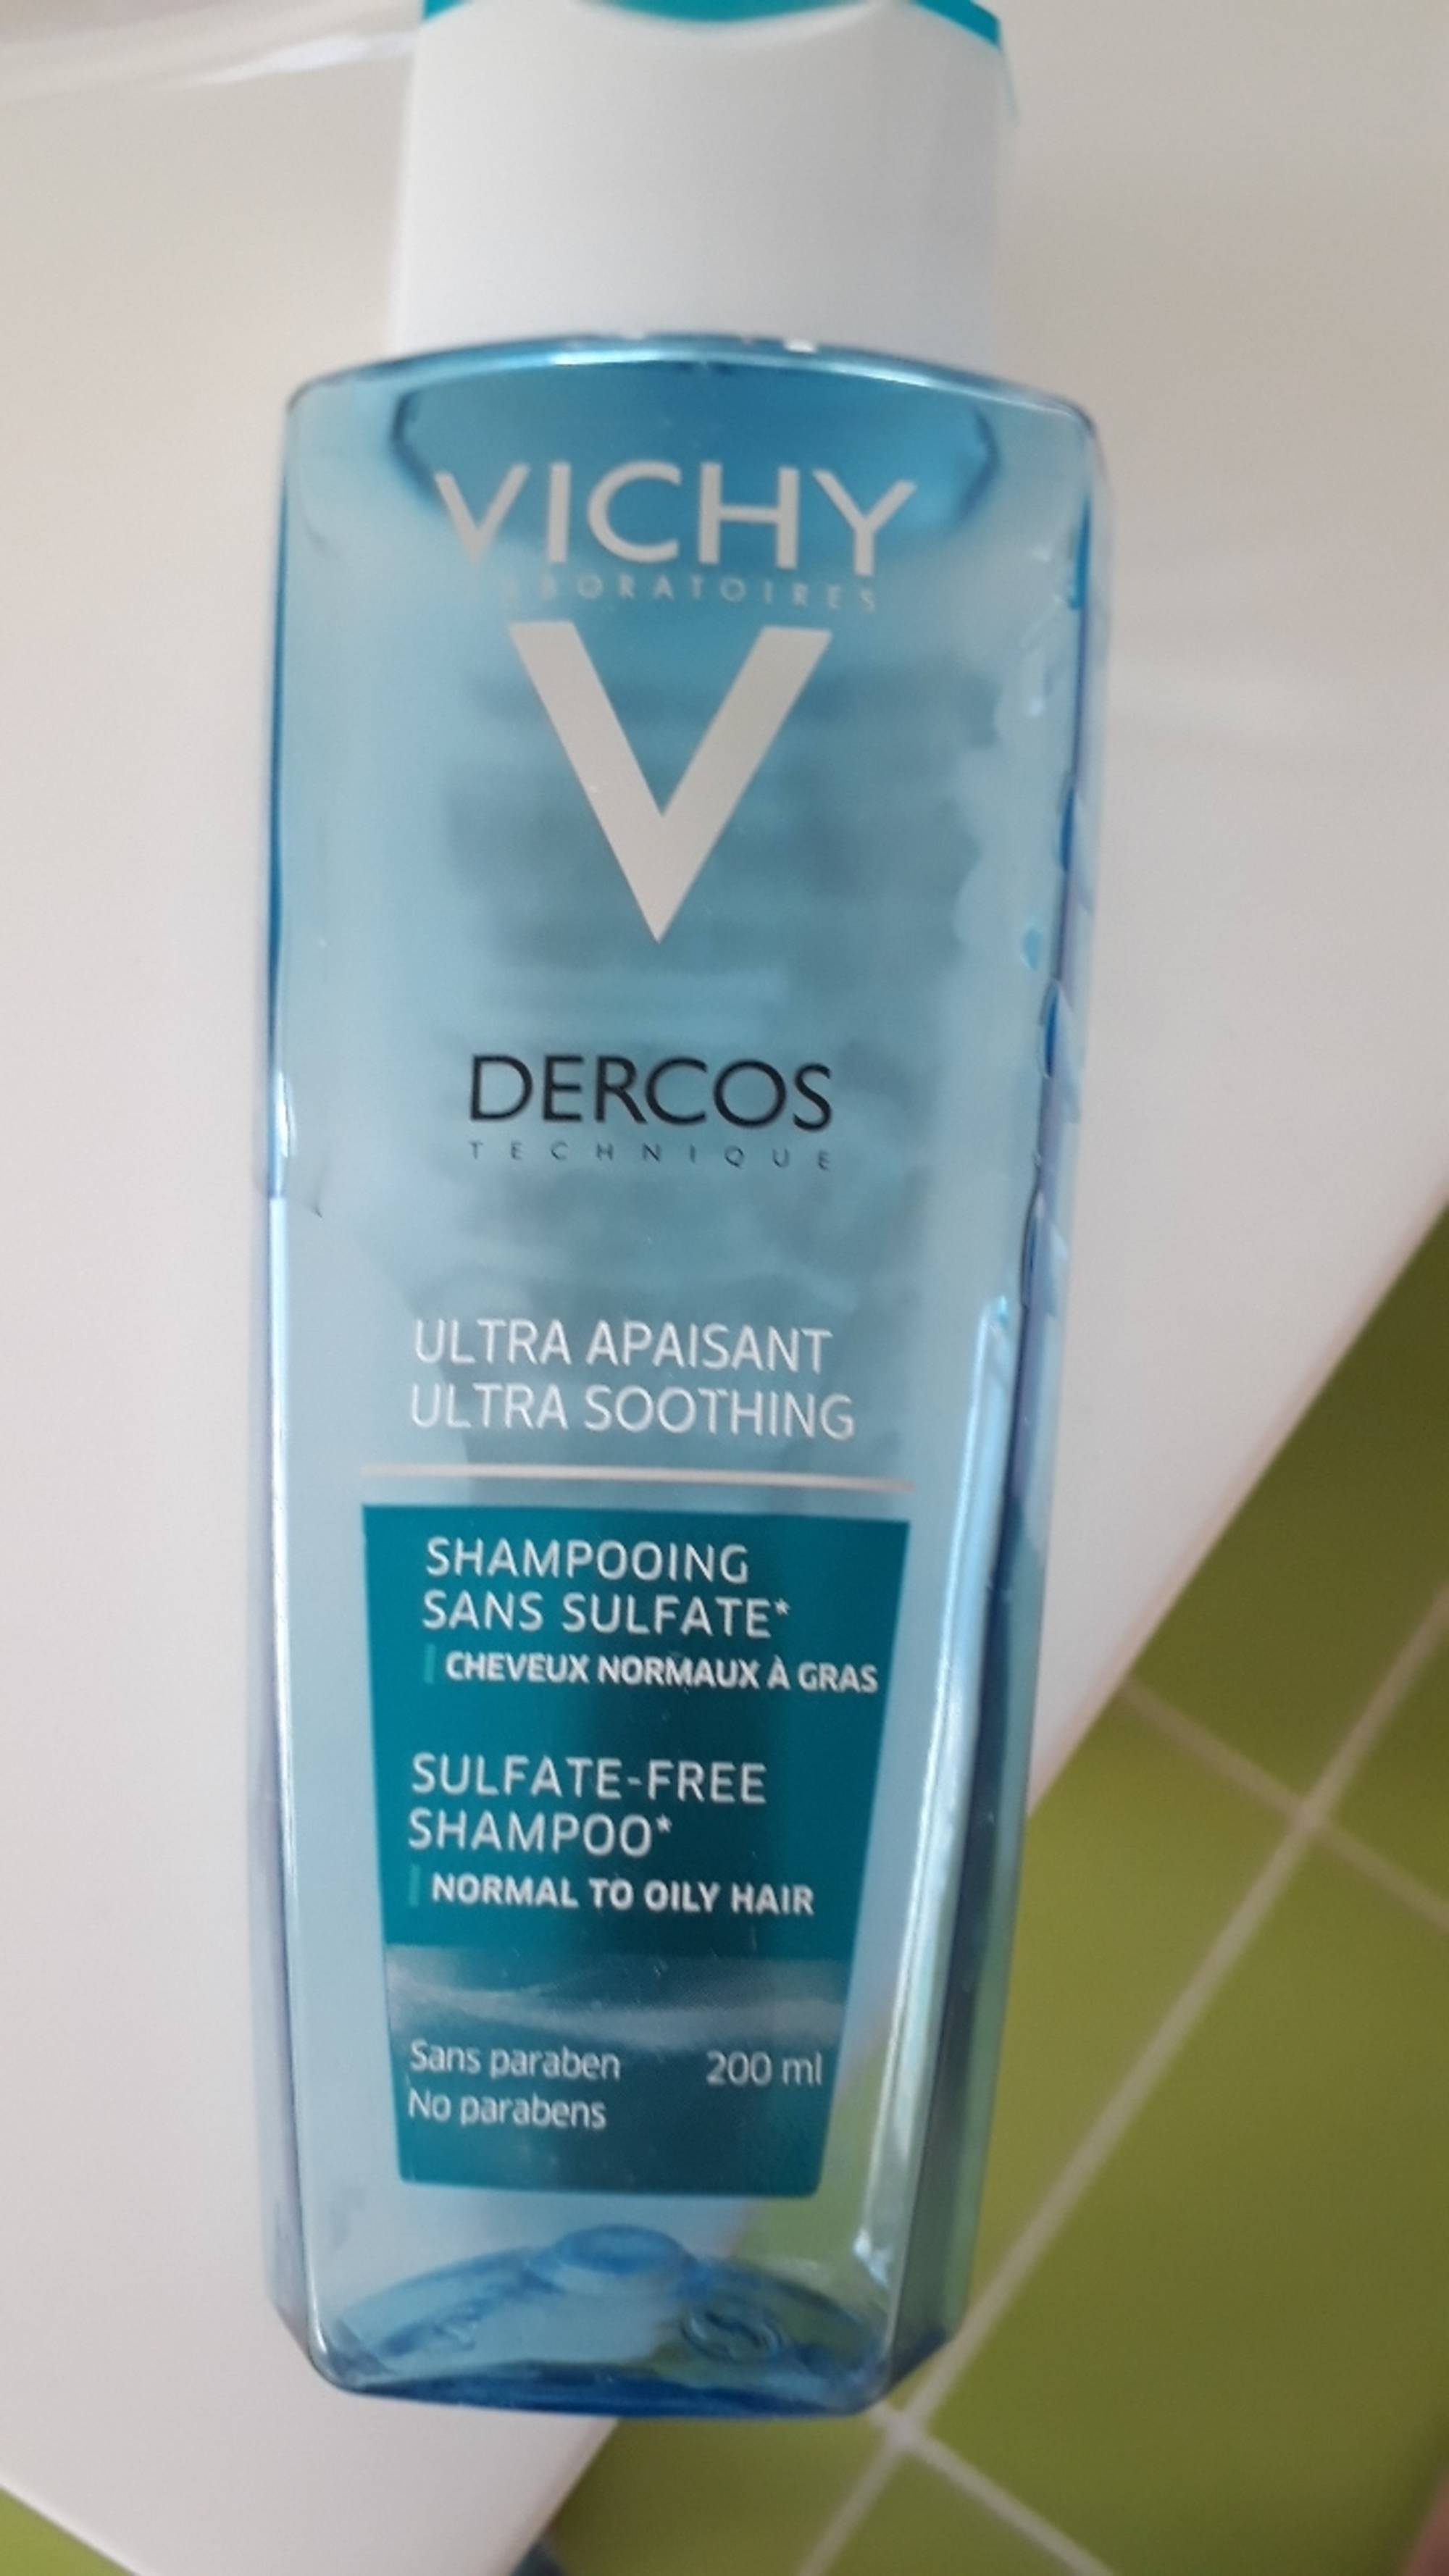 VICHY - Dercos Ultra apaisant - Shampooing sans sulfate